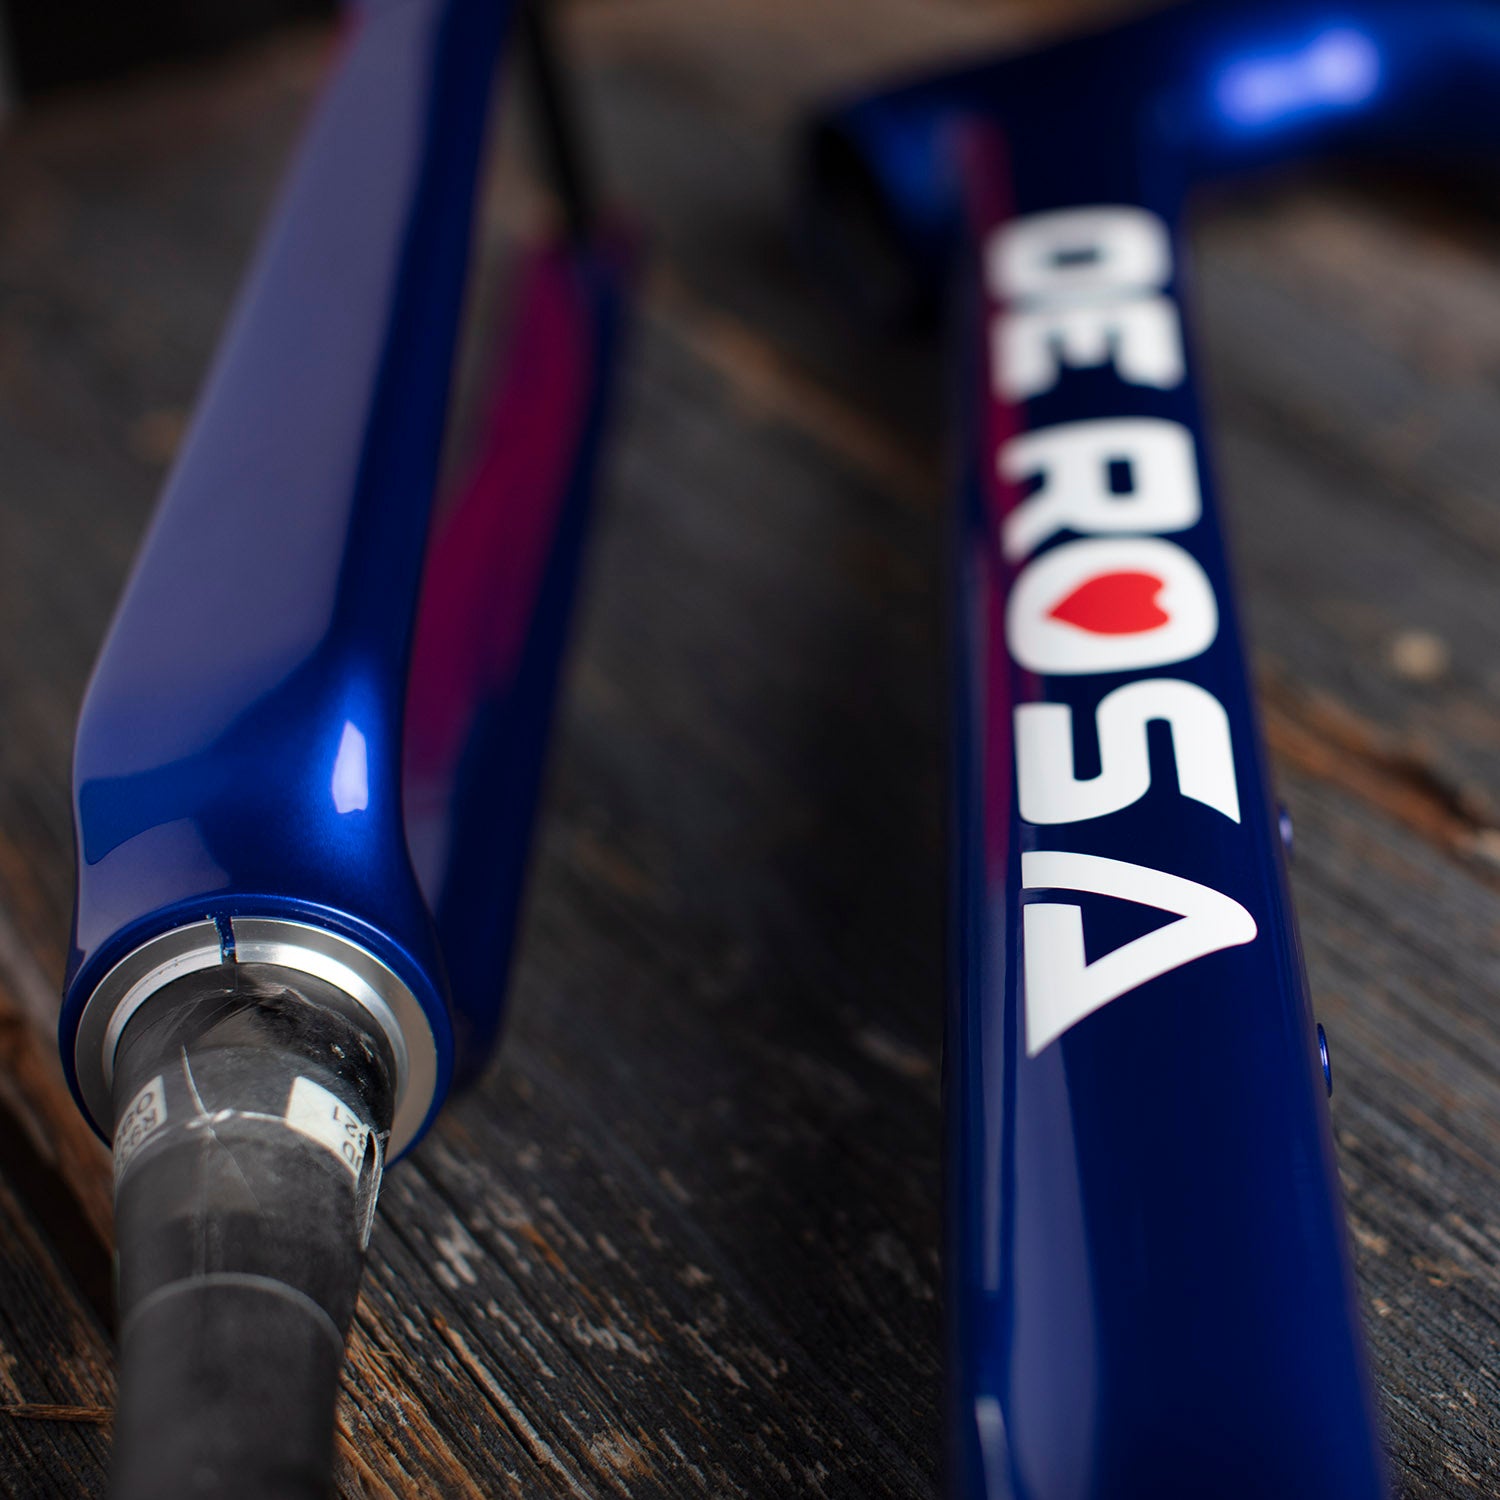 Profile image of the De Rosa 838 frameset in blue